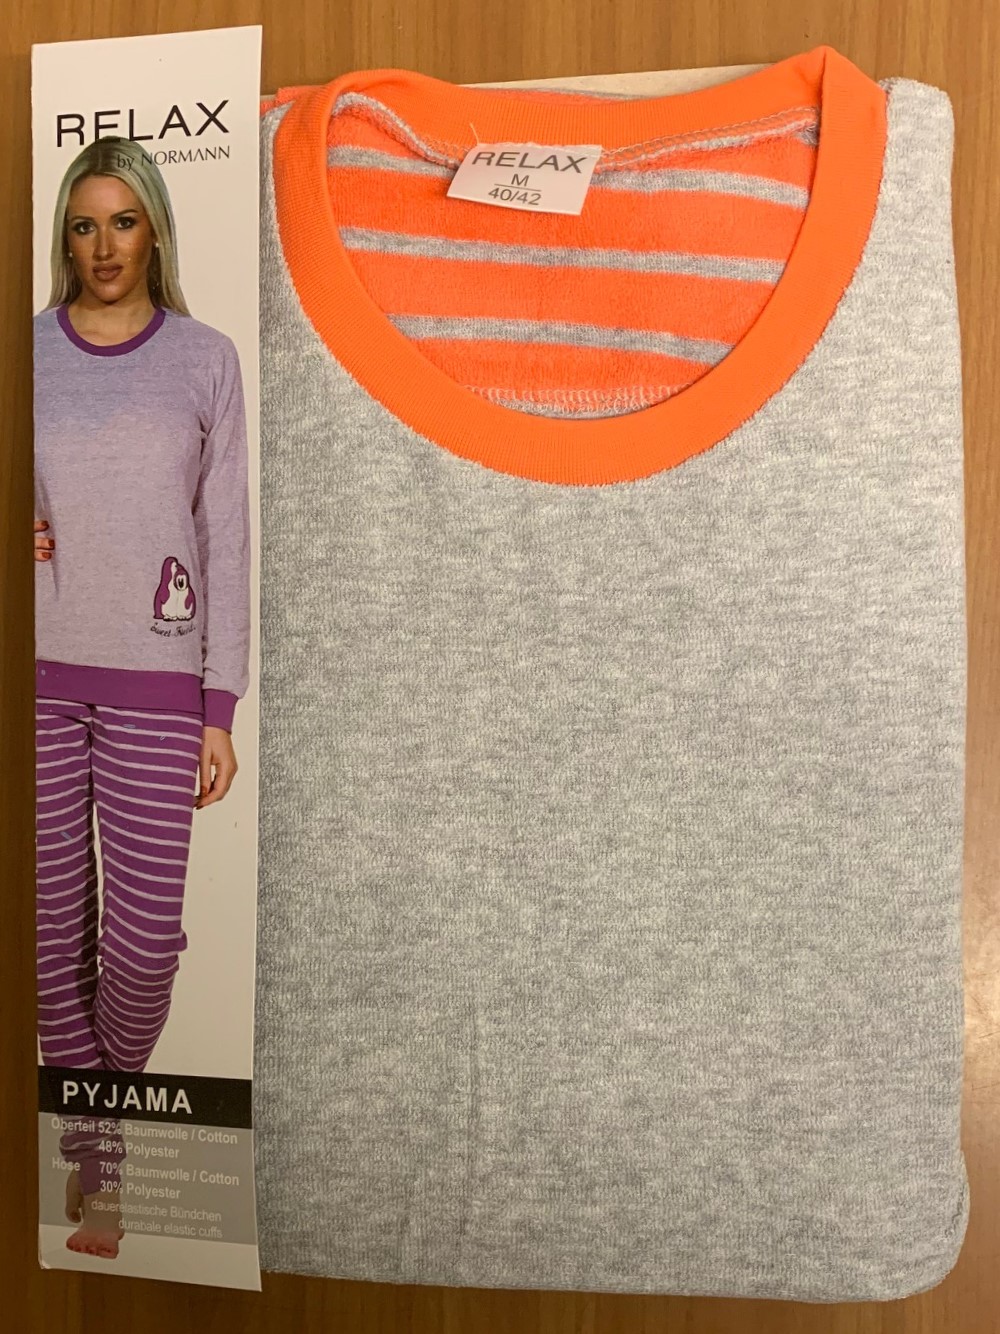 Normann badstof dames pyjama Relax 67249 - Oranje - XL 48/50